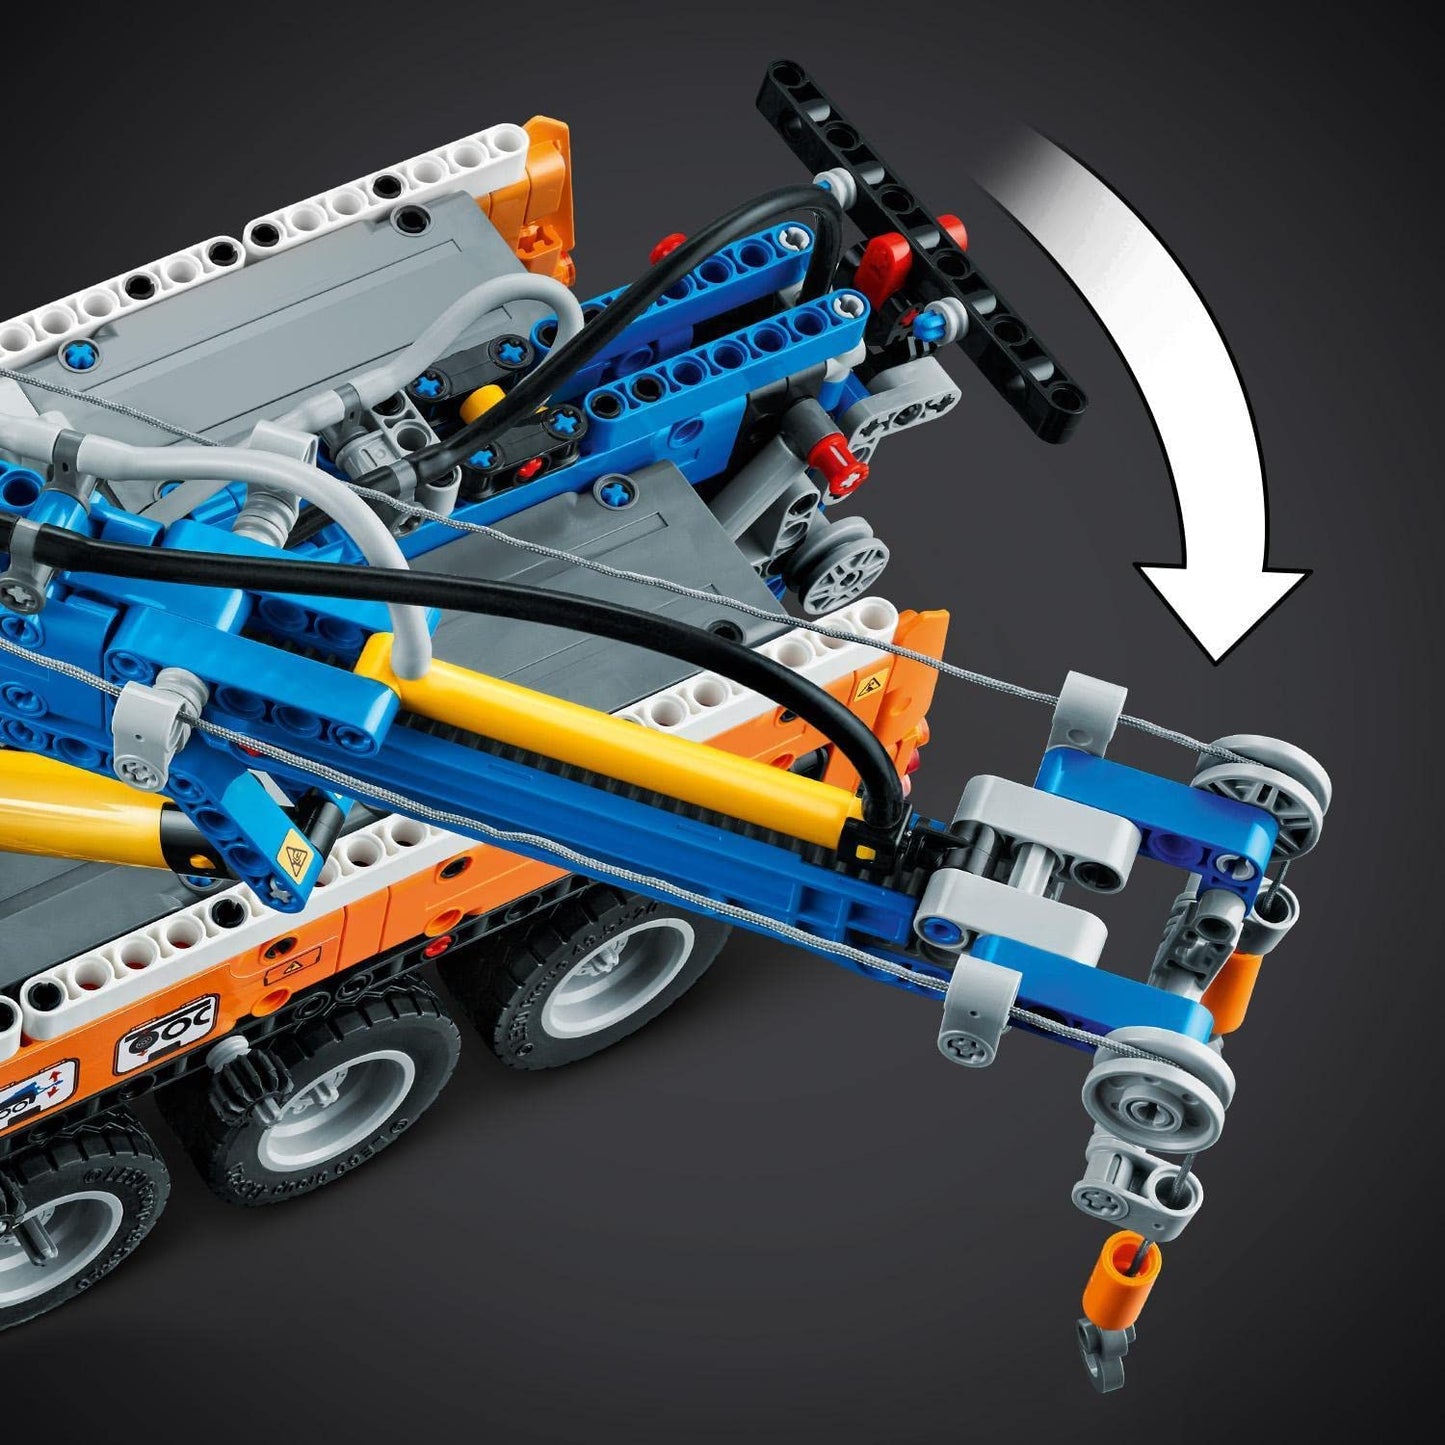 LEGO Technic - Heavy Duty Tow Truck 42128